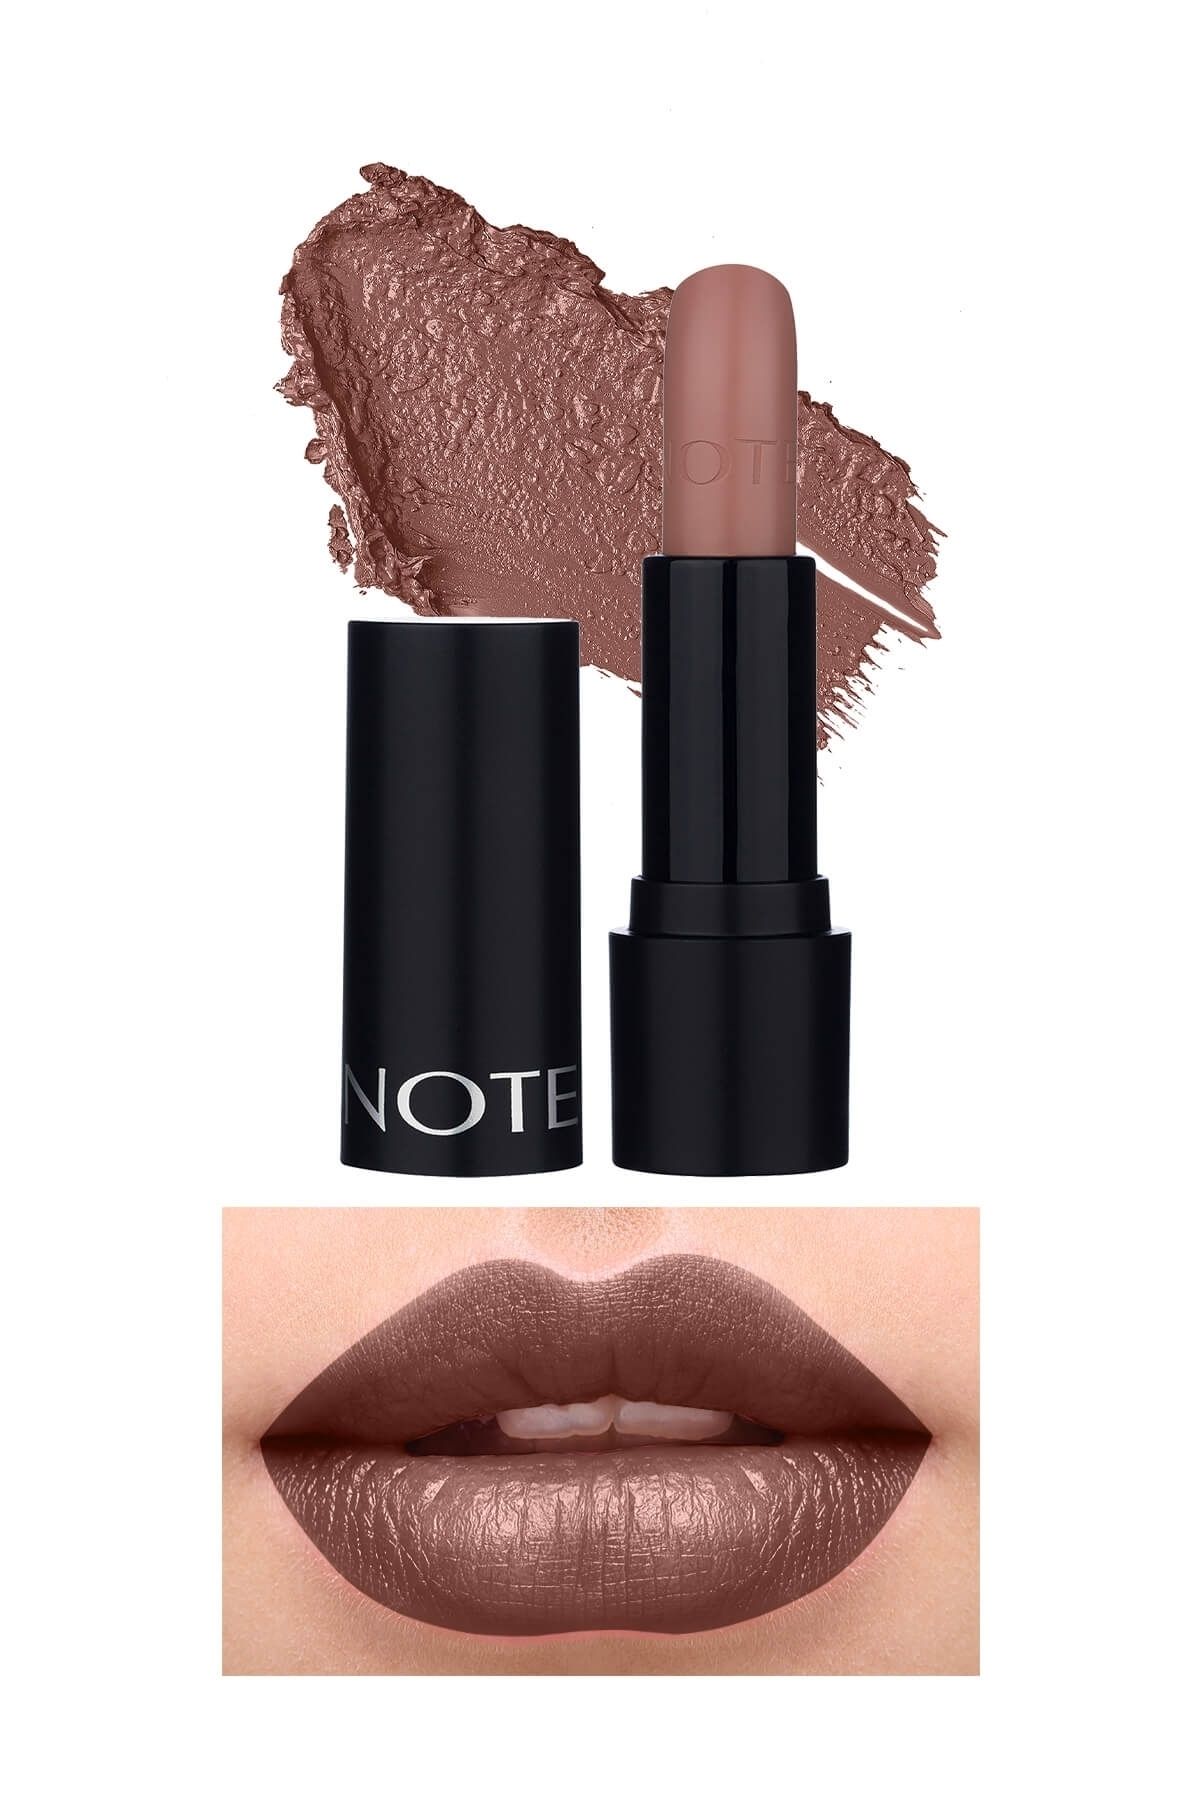 Note Cosmetics Deep Impact Lipstick Kremsi Dokulu Yarı Parlak Ruj 01 The Better Me Nude - Nude